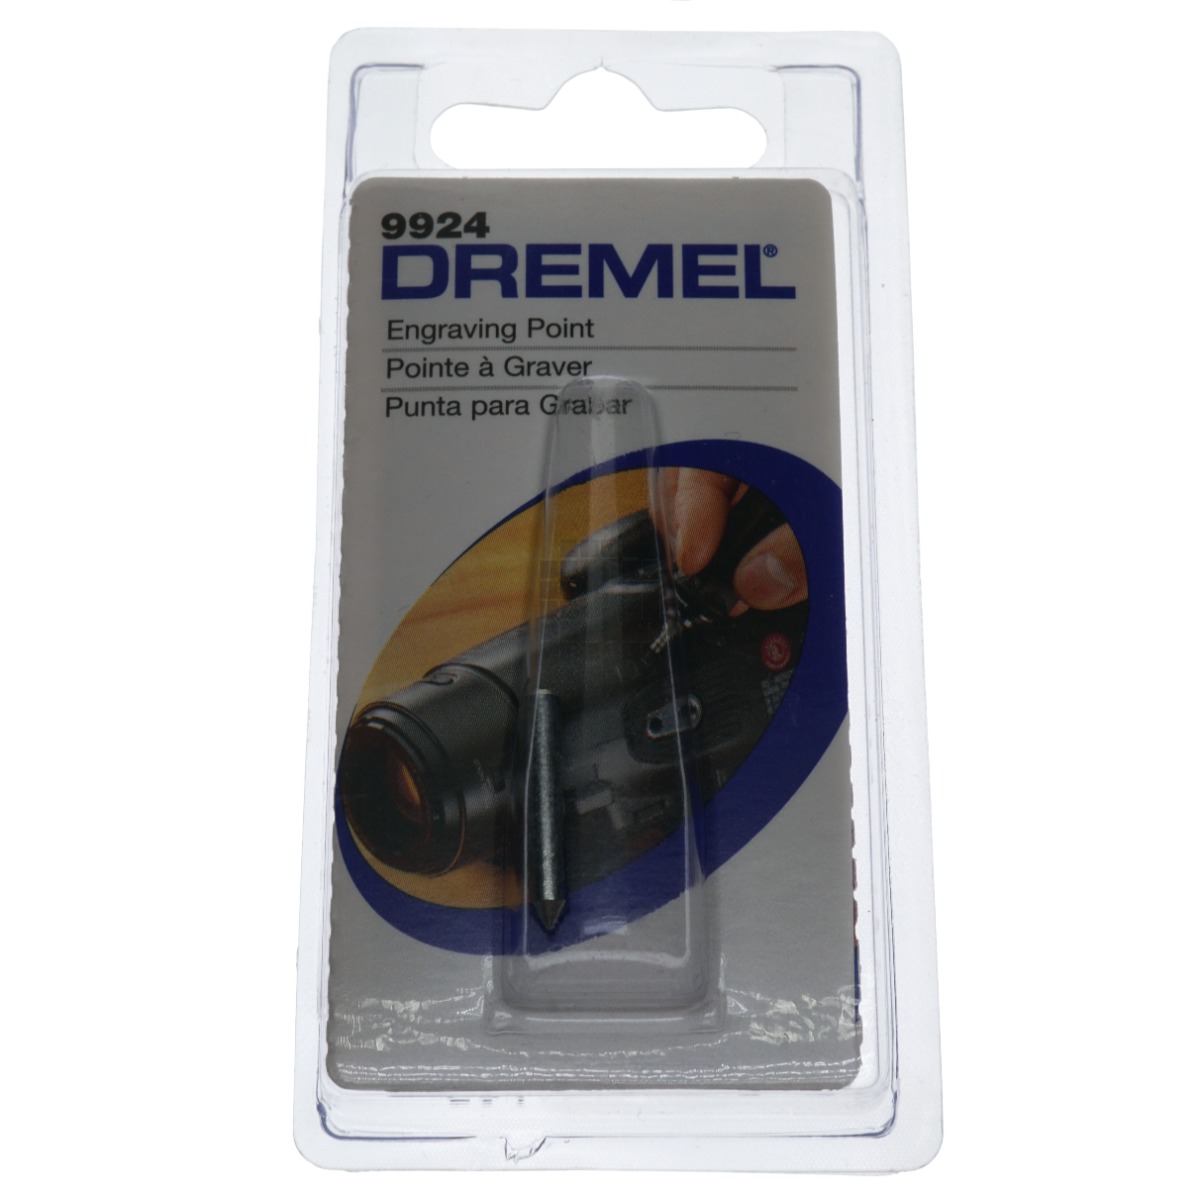 Dremel 9924, Bosch 2615009924 Carbide Engraving Point Tip